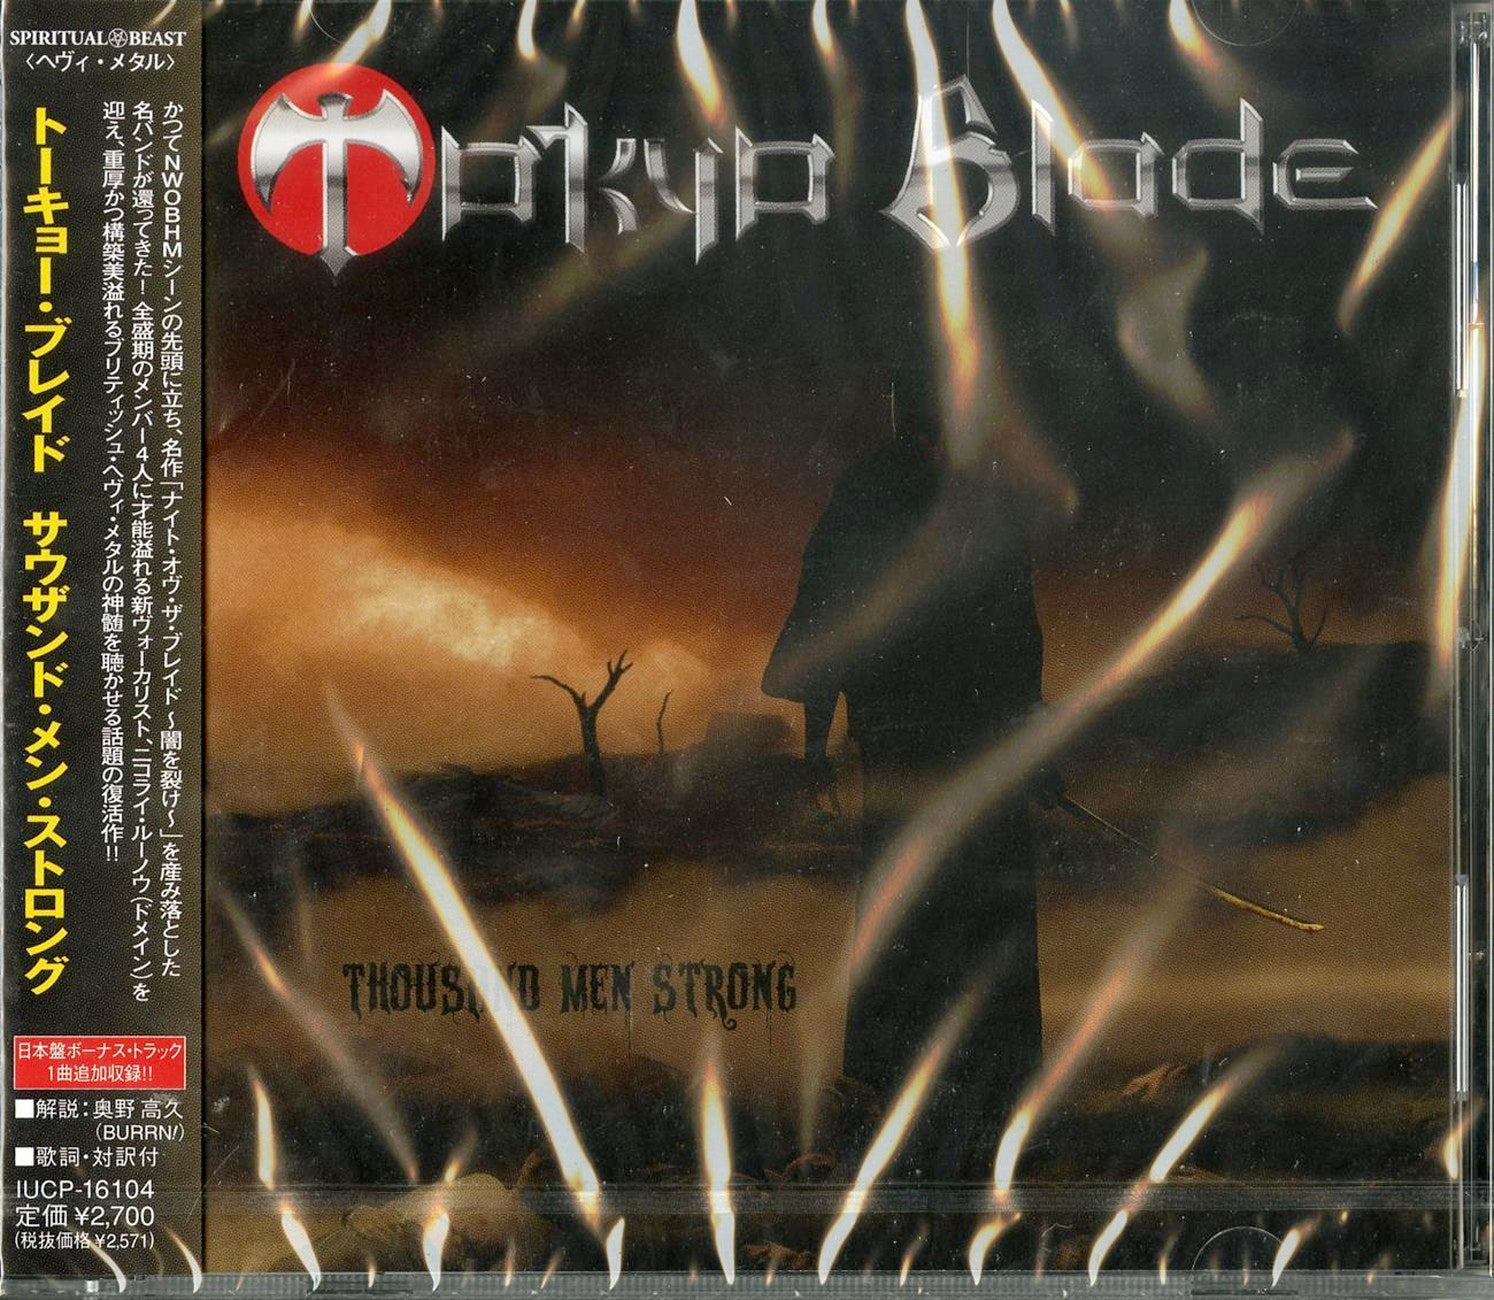 Tokyo Blade - Thousand Men Strong - Japan CD Bonus Track – CDs Vinyl Japan  Store 2011, British Metal/NWOBHM, CD, Jewel case, Metal, Tokyo Blade CDs